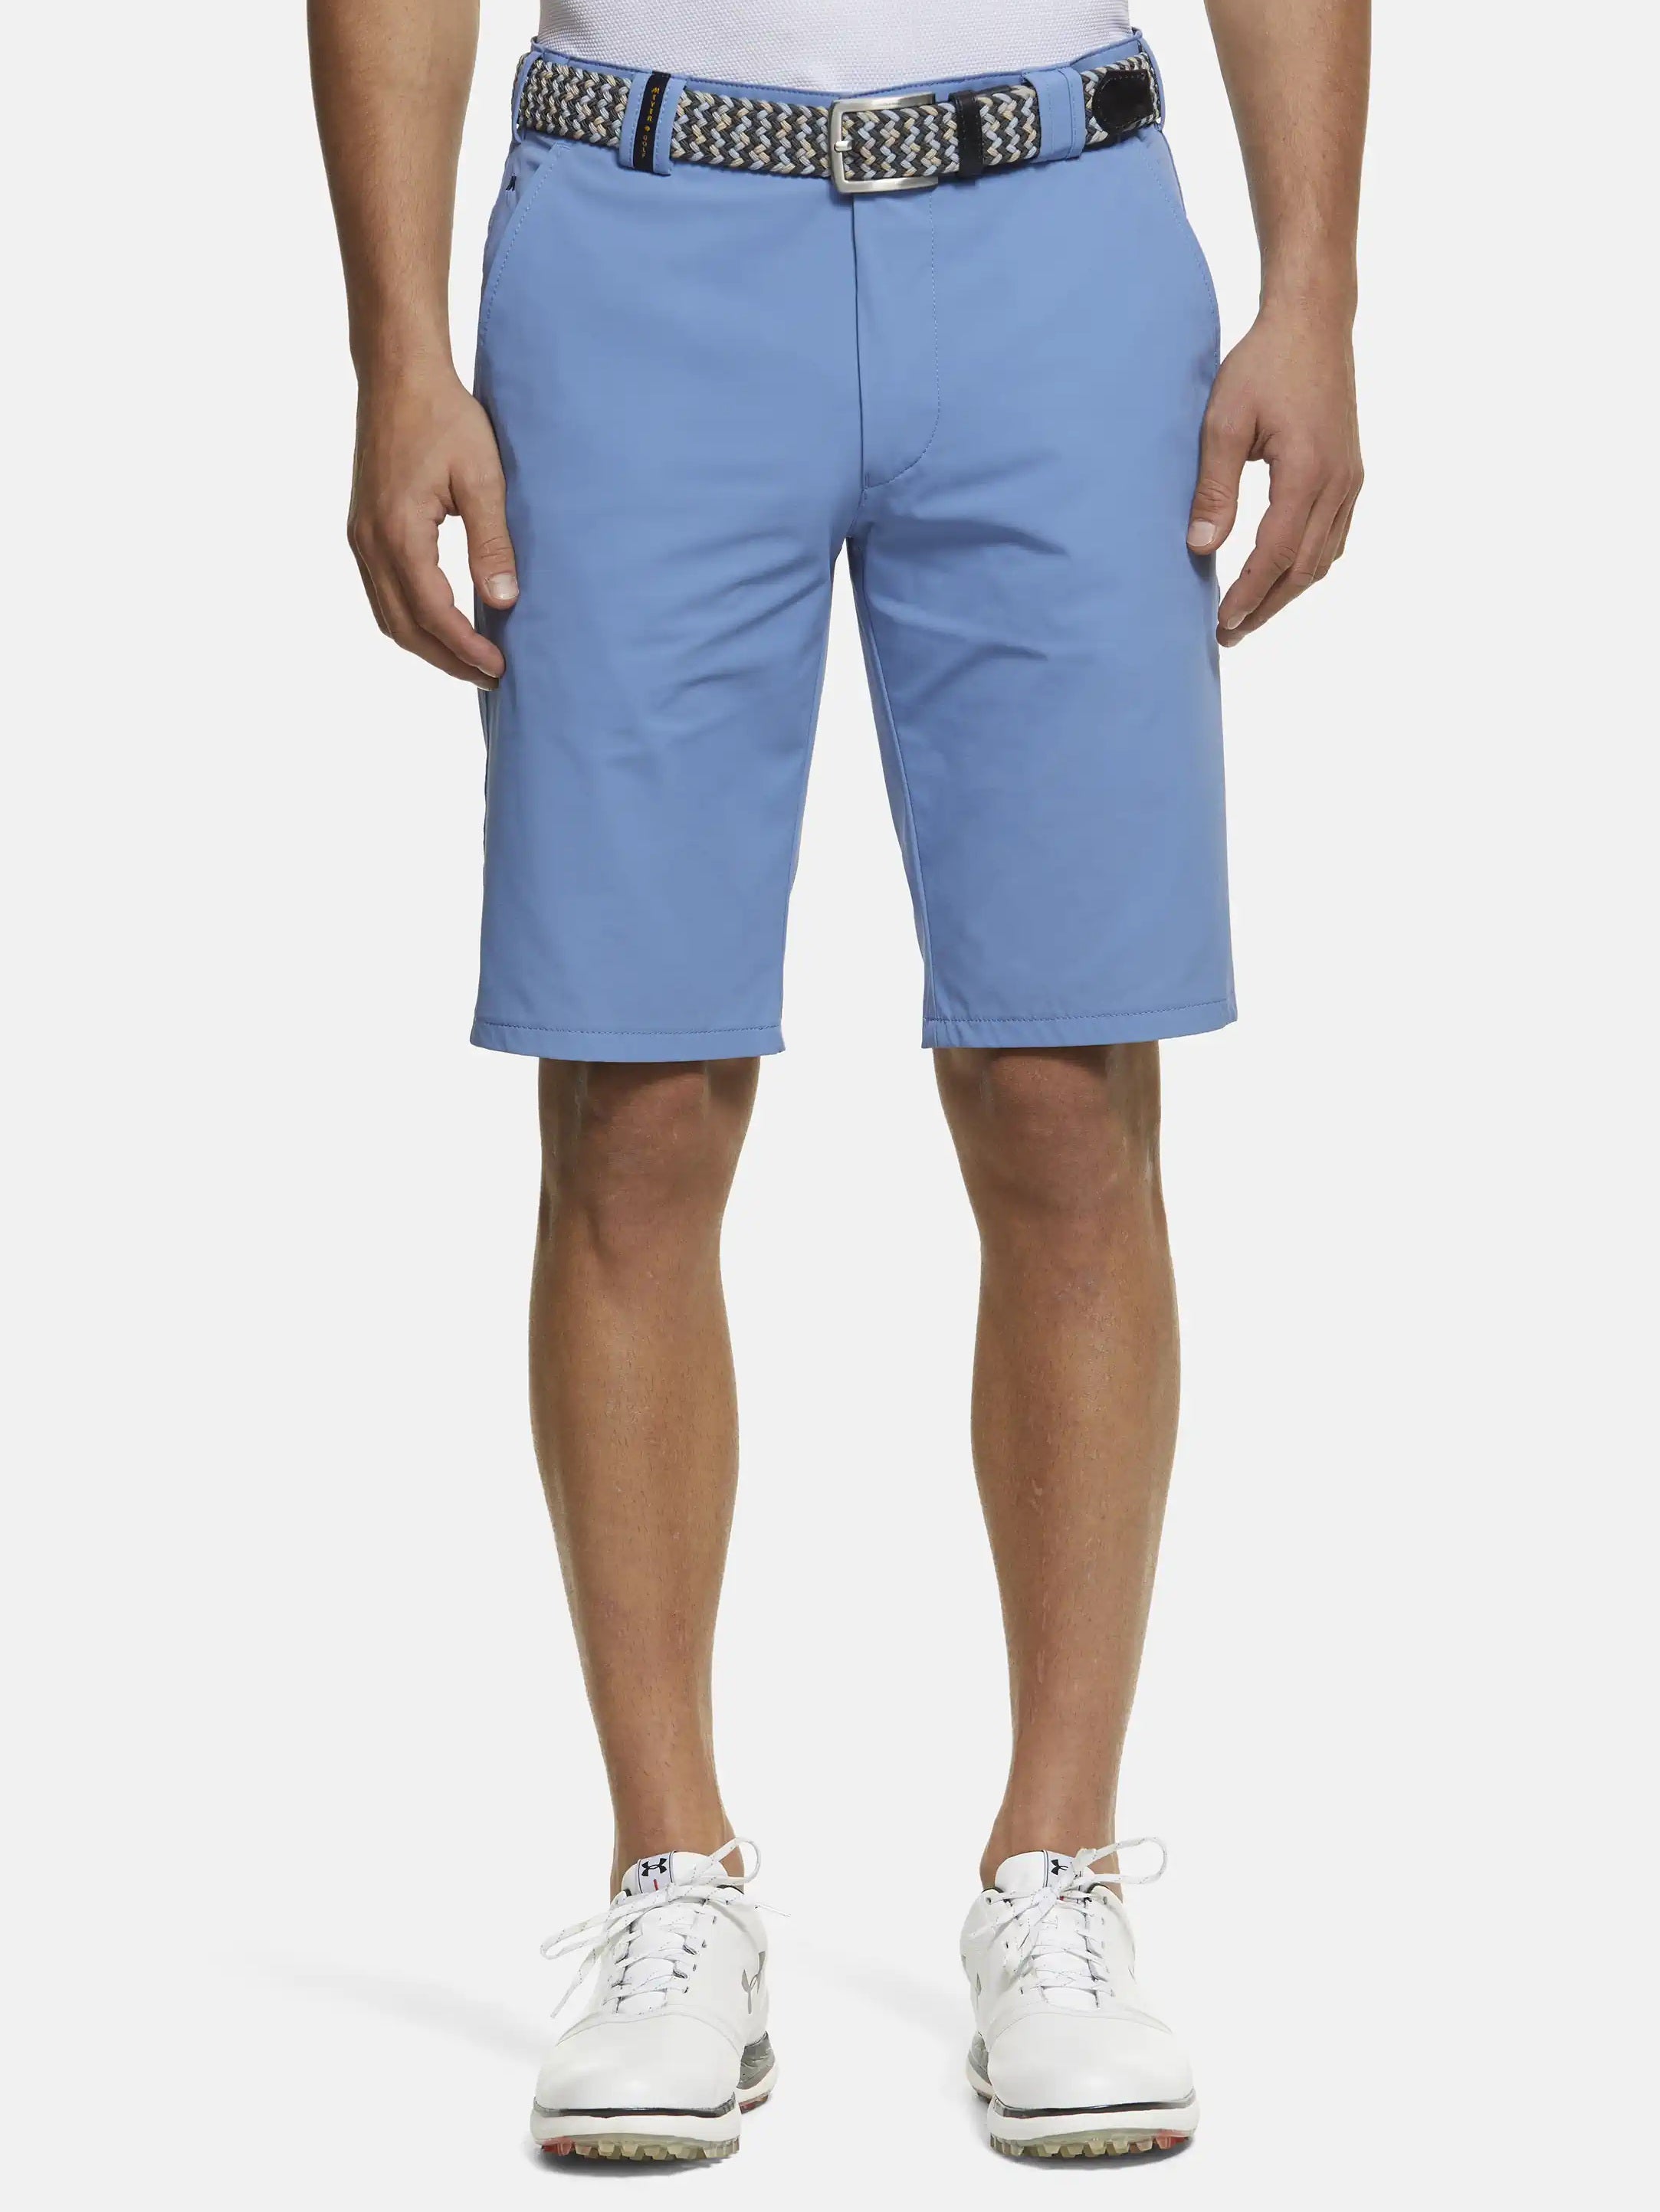 30% OFF - MEYER Golf Shorts - St. Andrews 8070 High Performance Cotton - Light Blue - Size: 40